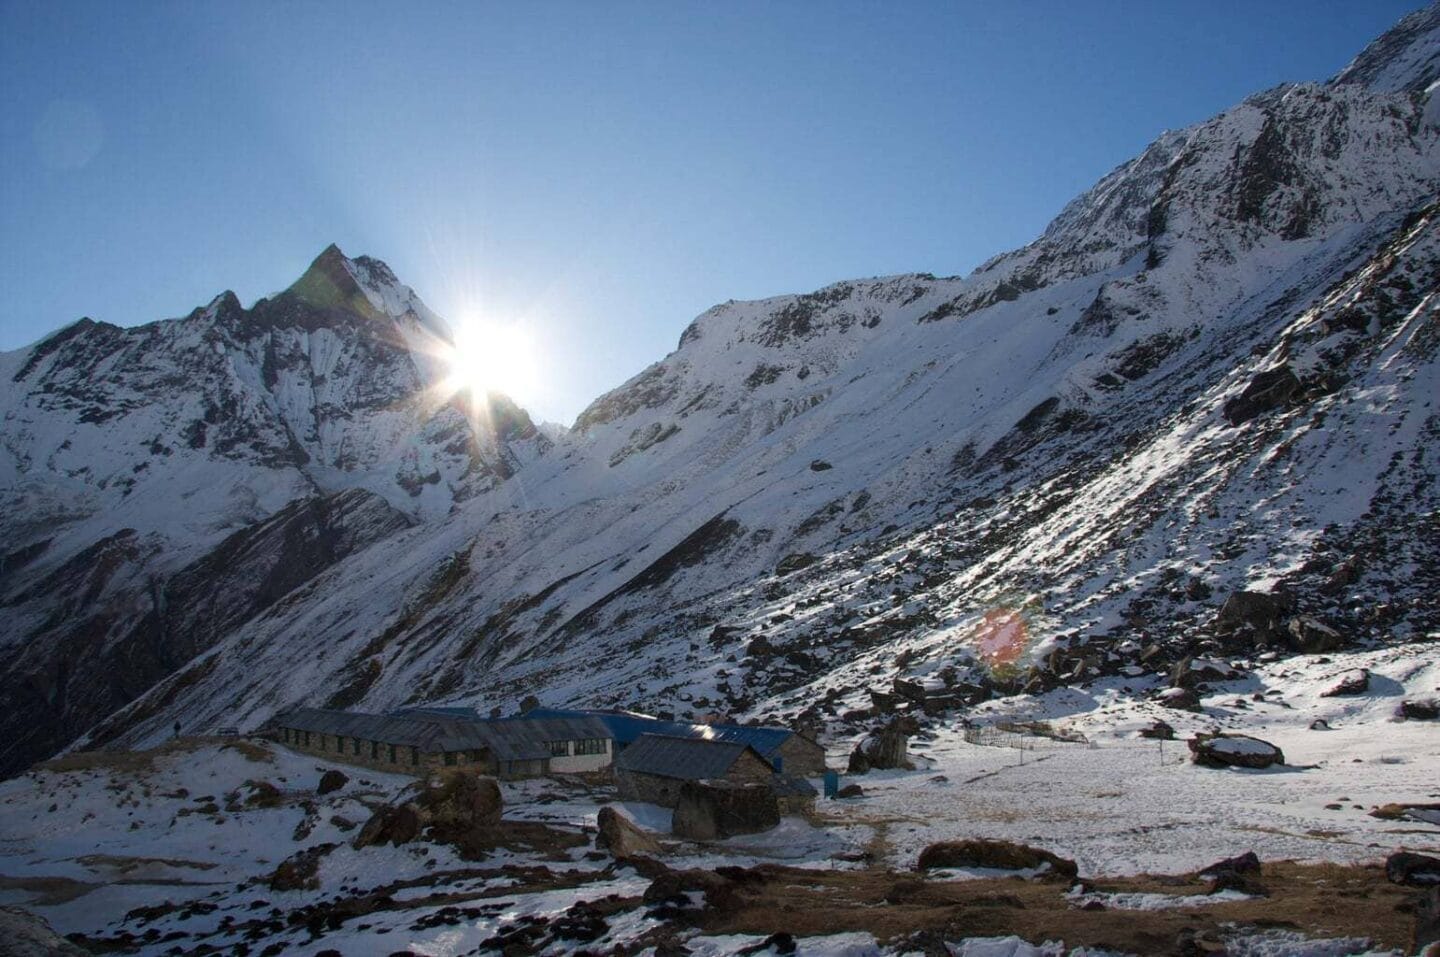 Trekking to Annapurna Base Camp - Our Honeymoon